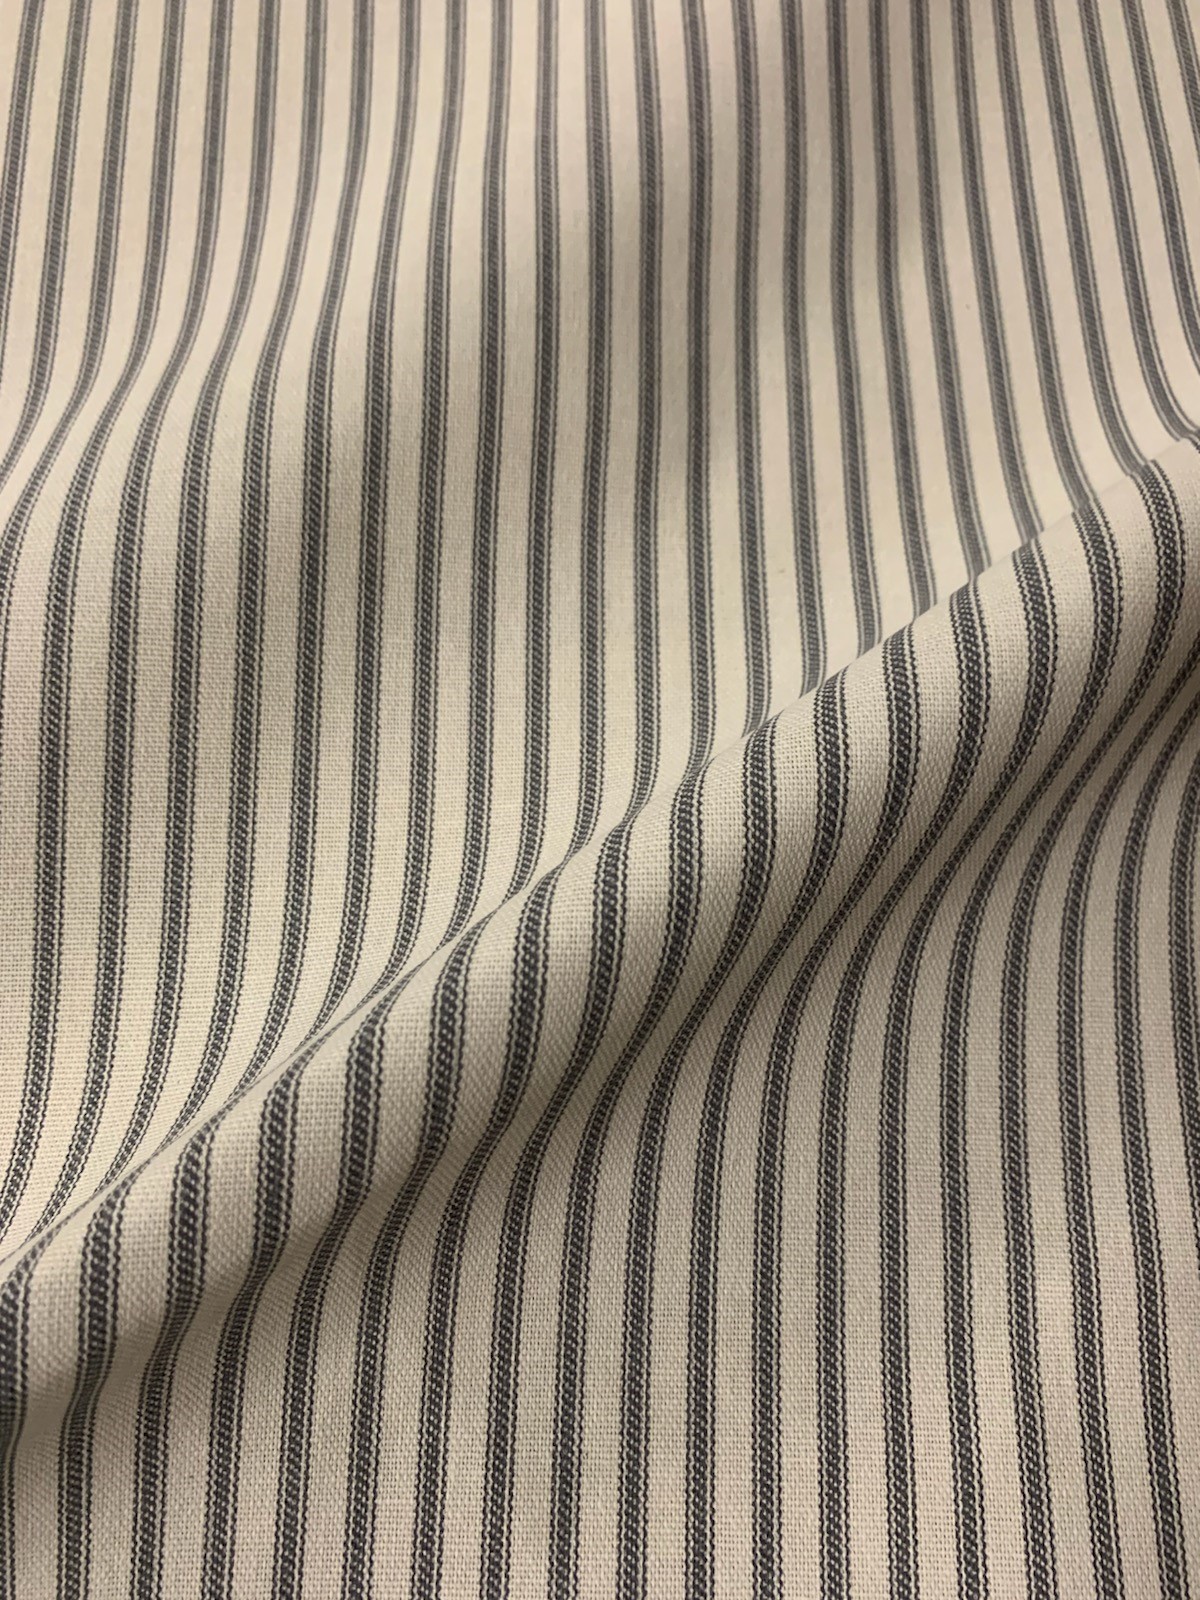 54" Dark Grey Stripe Ticking Fabric - Per Yard